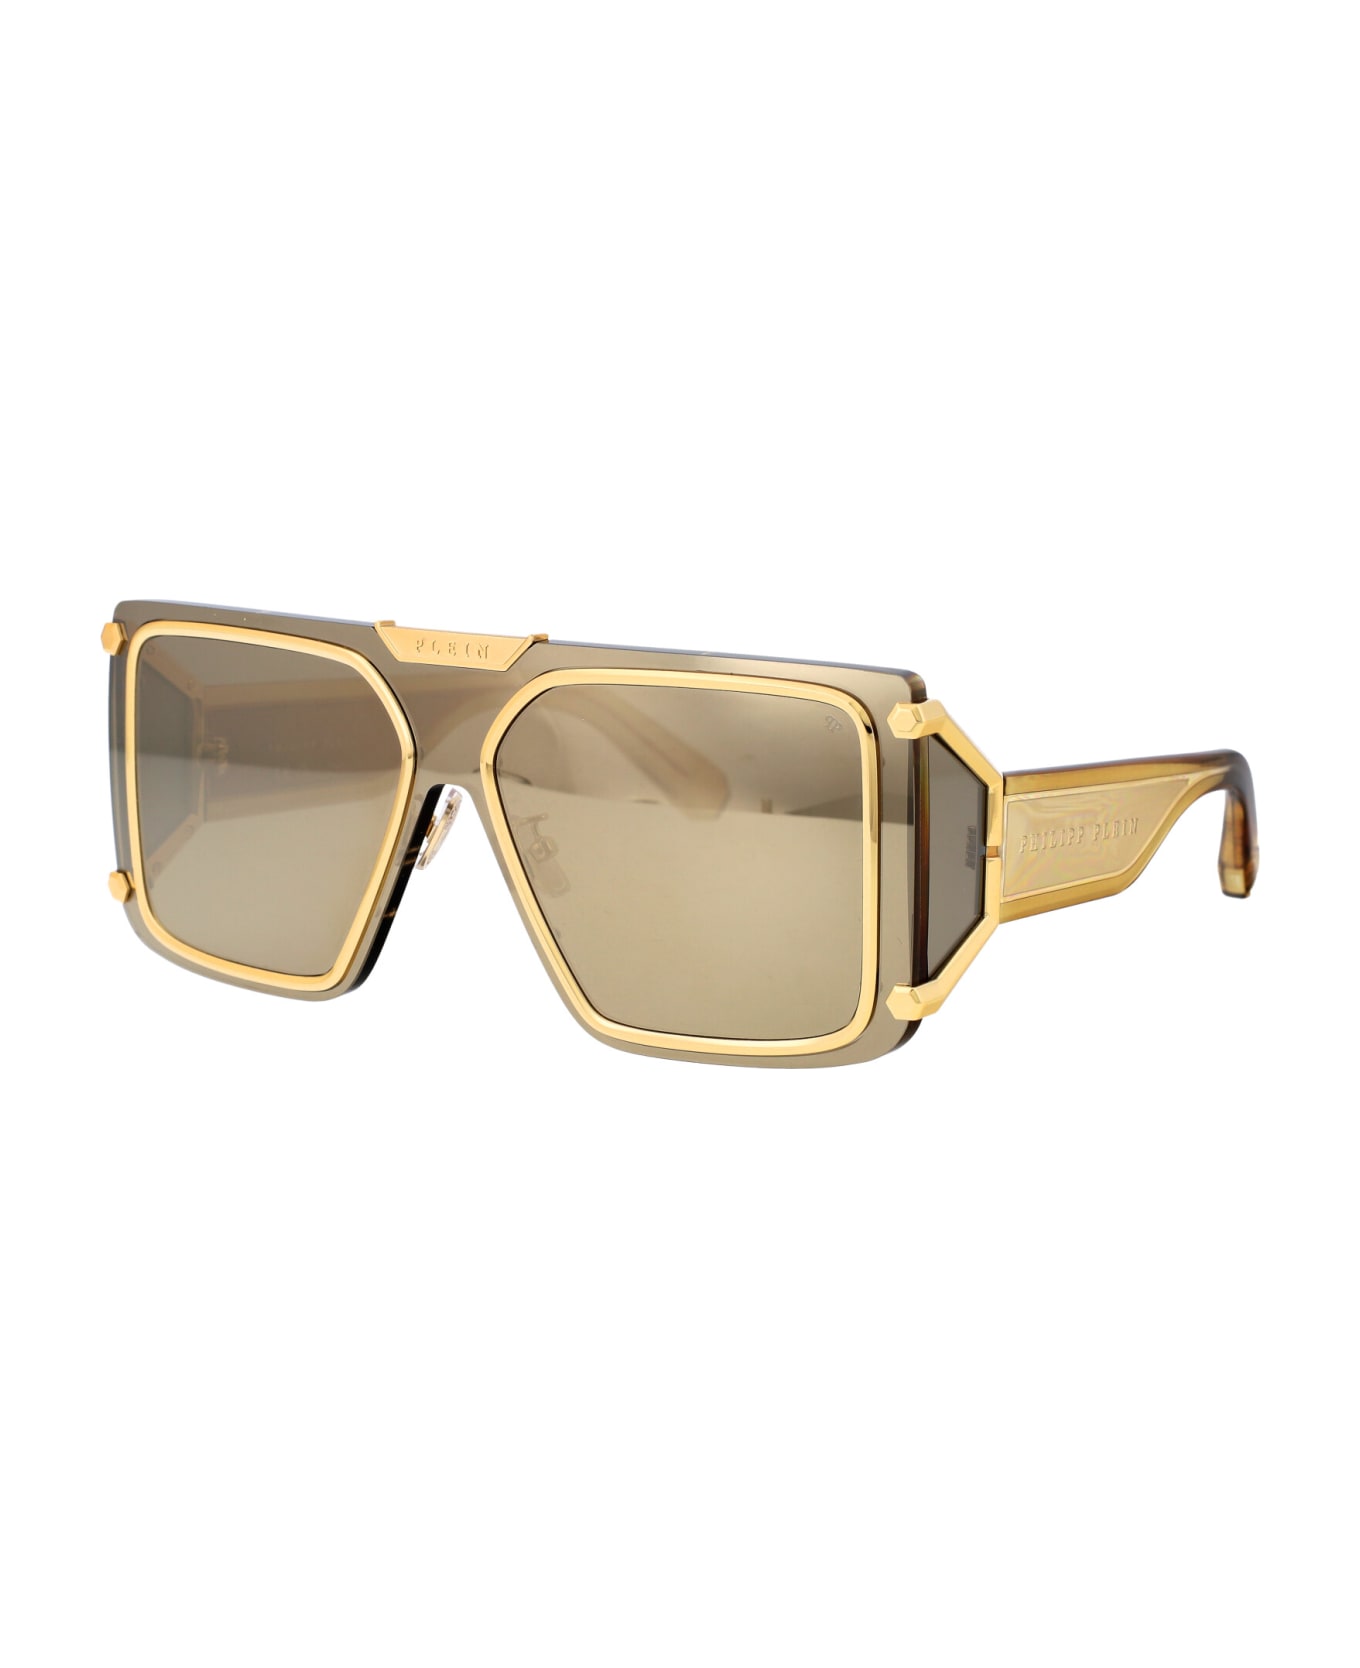 Philipp Plein Spp096m Sunglasses - 400G GOLD サングラス